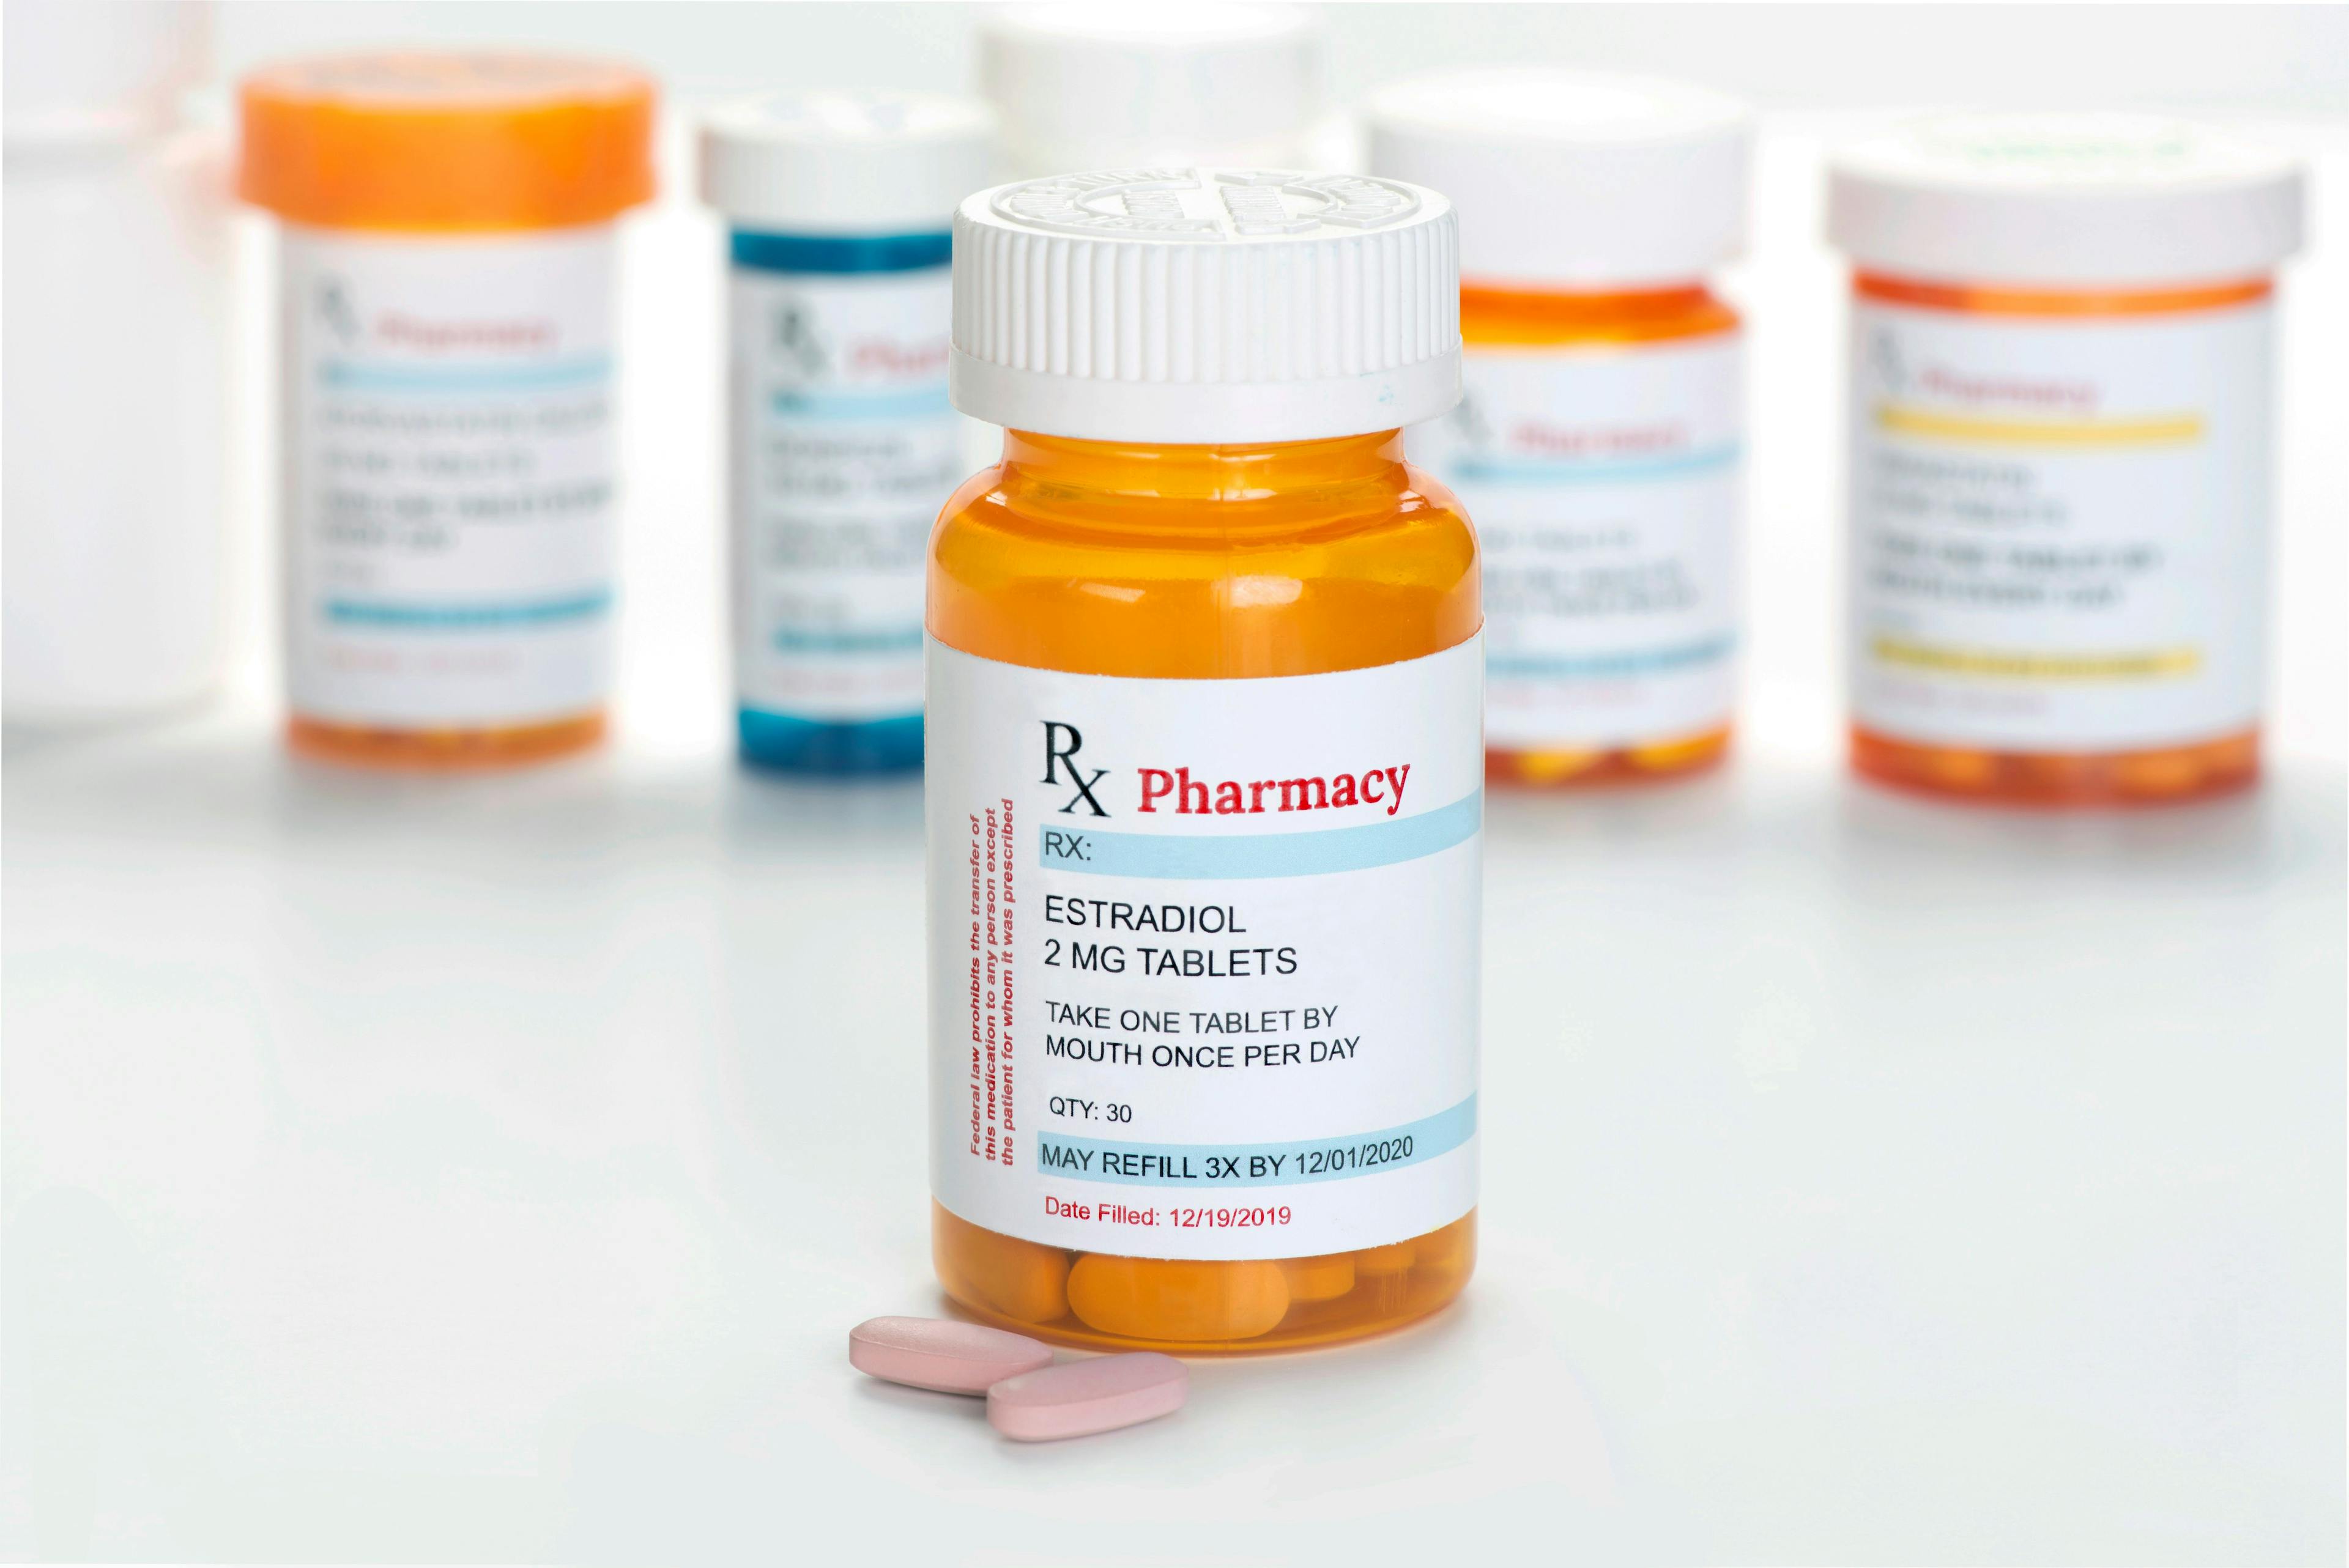 Estradiol generic estrogen Prescription Medicine Container with other prescription medication bottles in background | Image Credit: © Sherry Young - stock.adobe.com